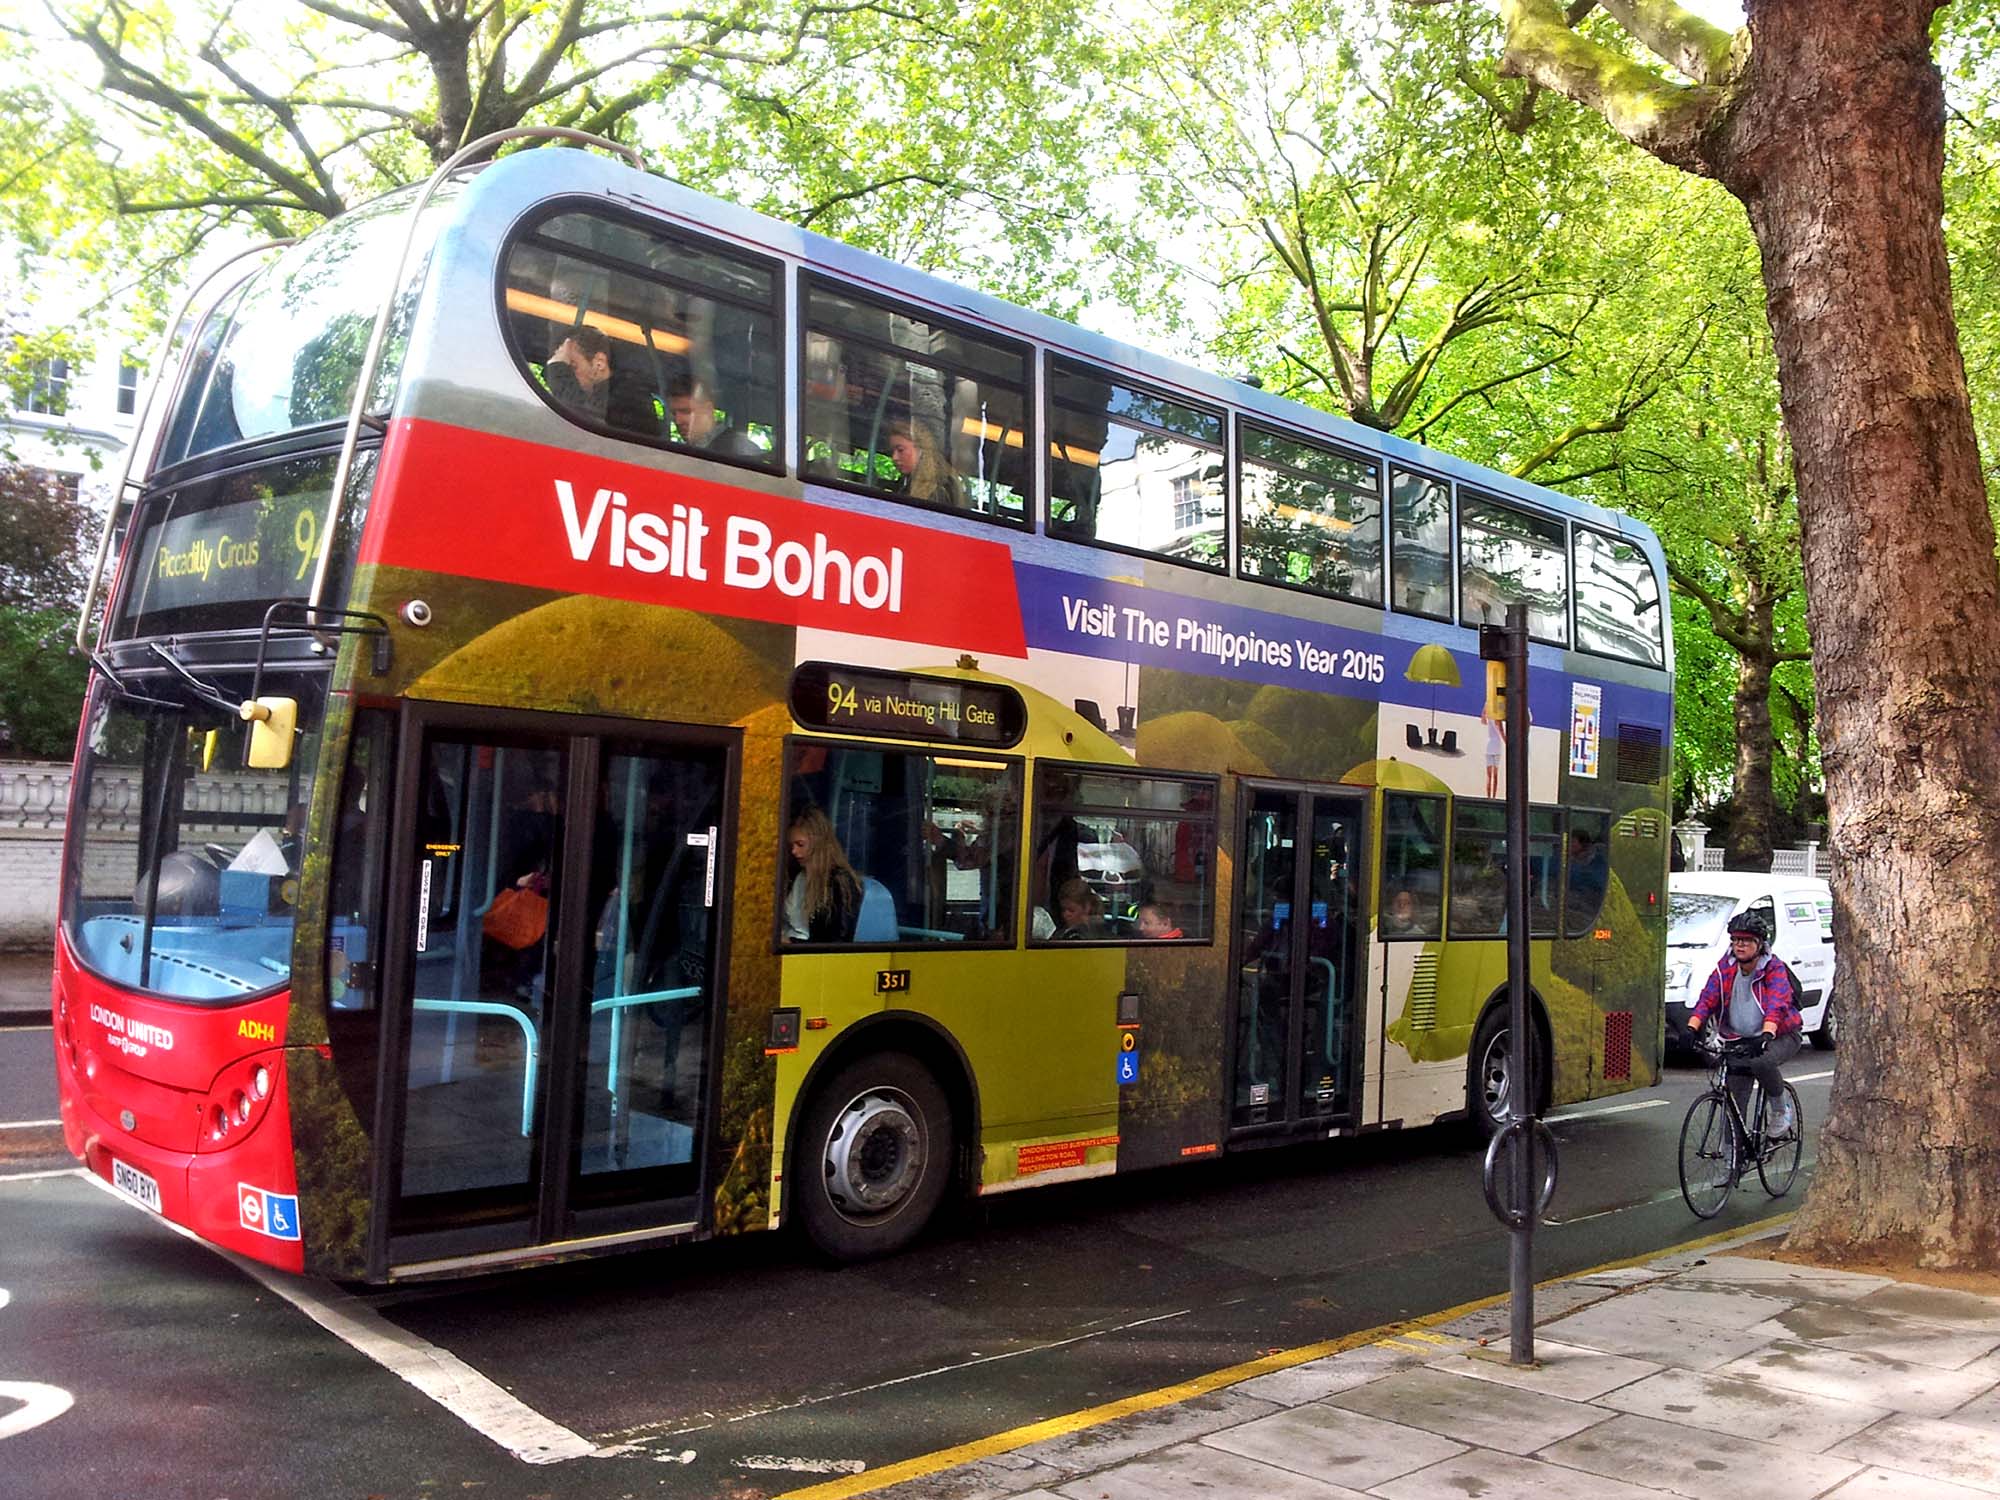 Visit Bohol Red London Double Decker Bus